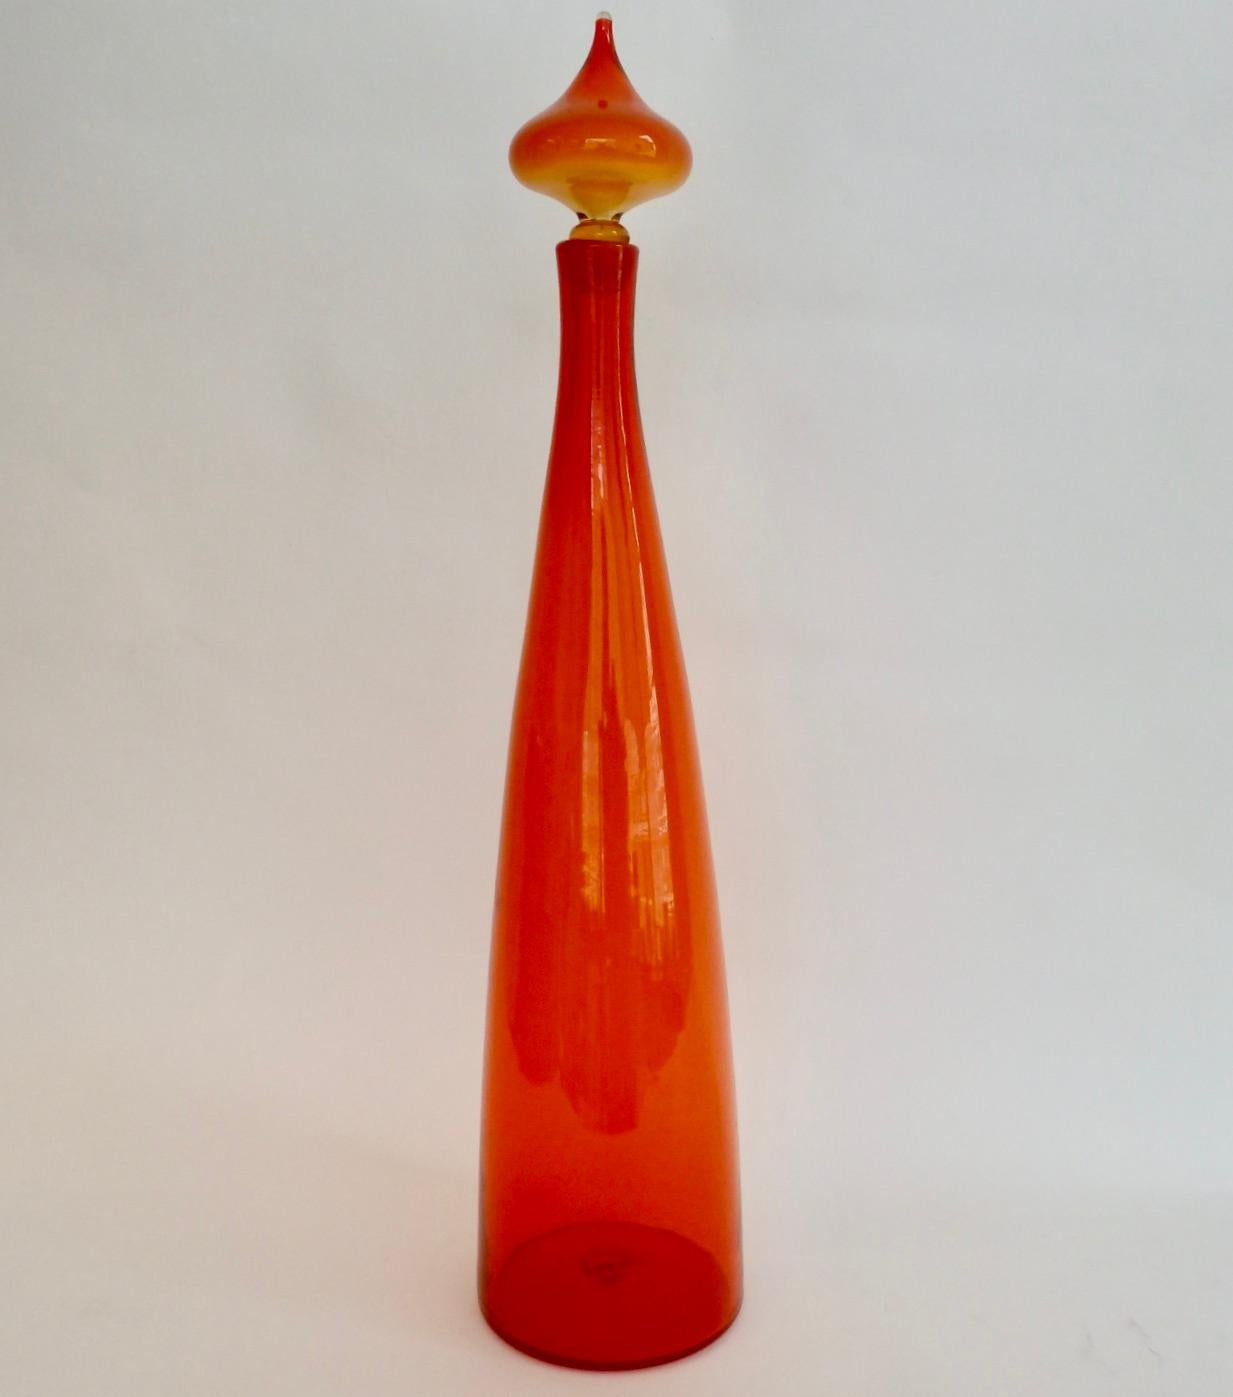 Hand-Crafted Large Blenko Glass Orange Bottle Vase with Stopper